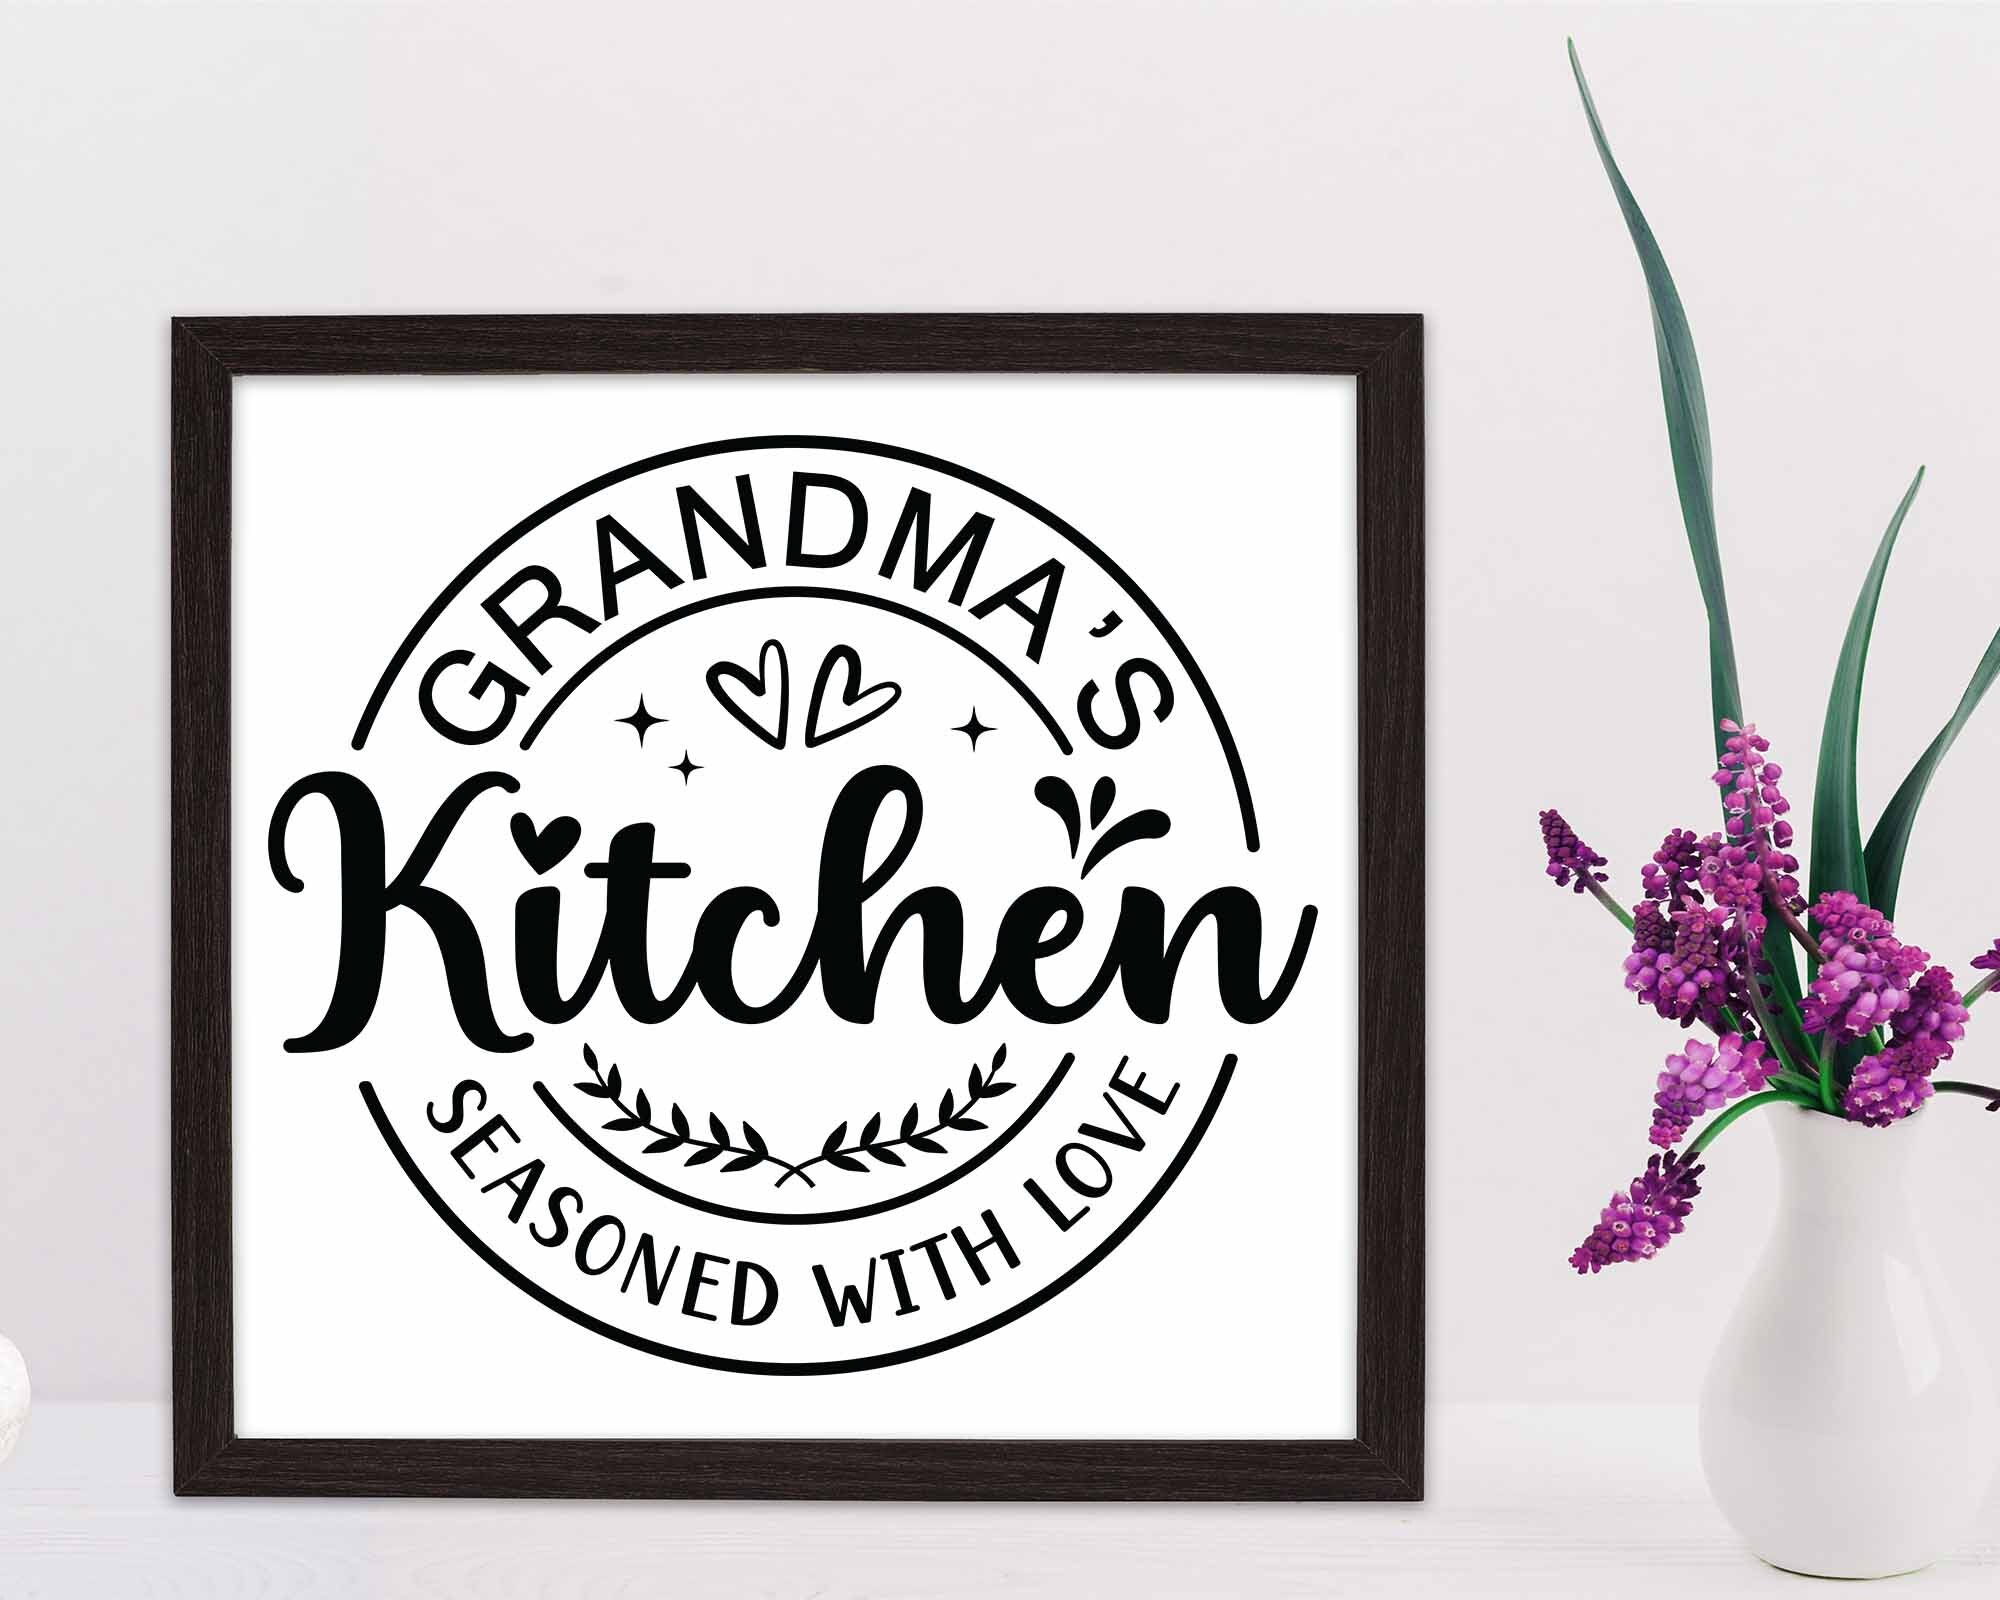 Grandma's Kitchen Solid-Faced Canvas Print